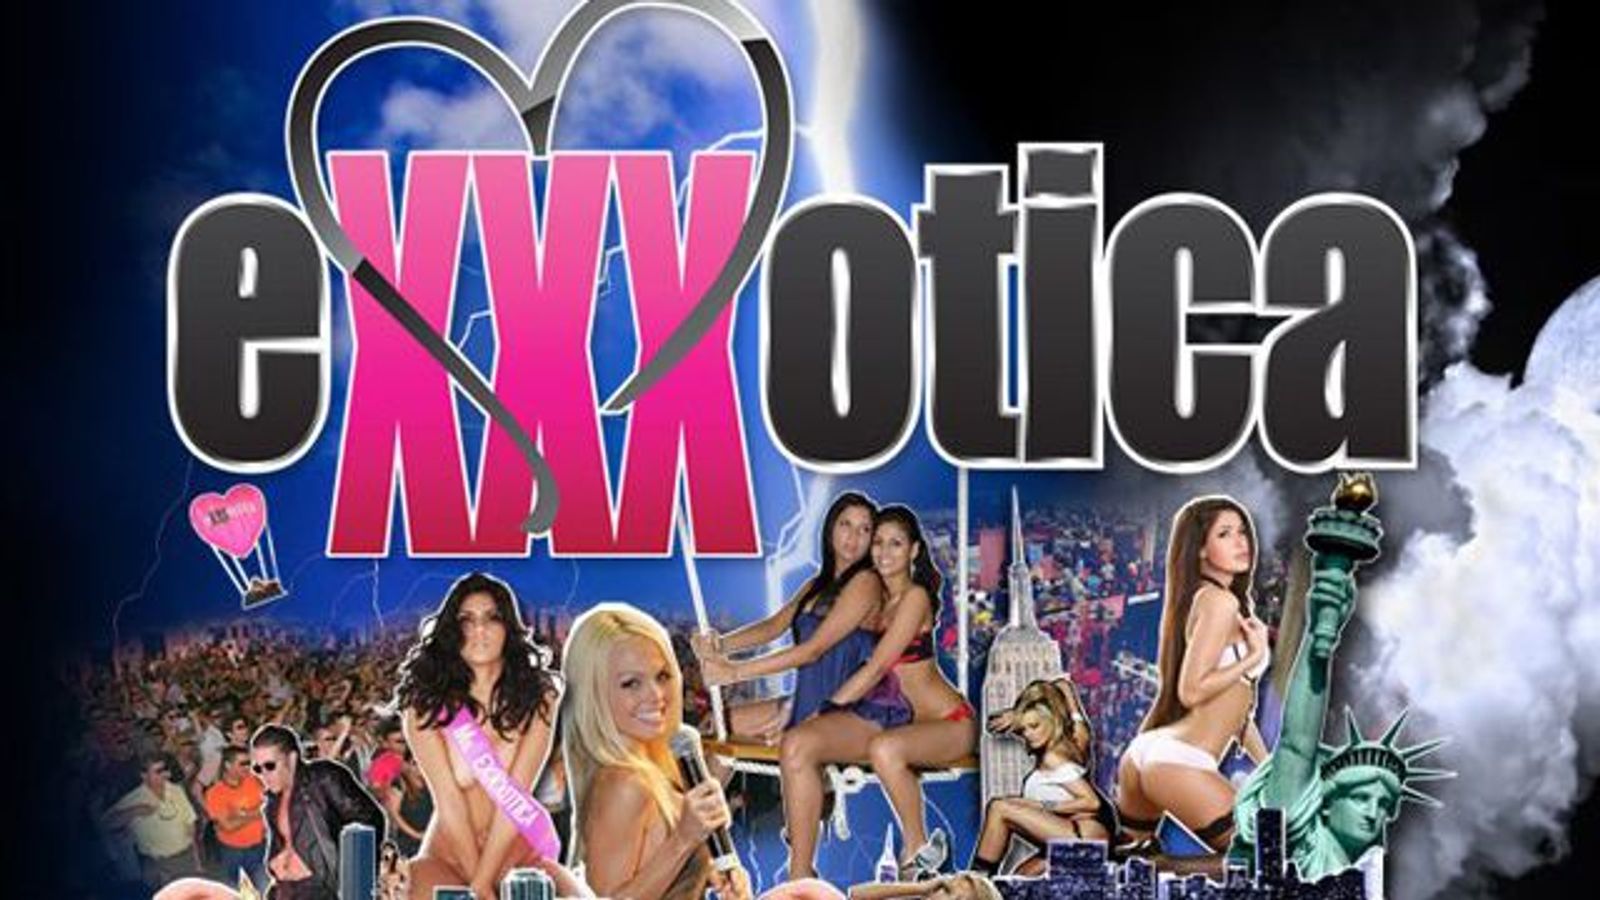 EXXXOTICA Names AVN Exclusive Media Partner For 2011 Events